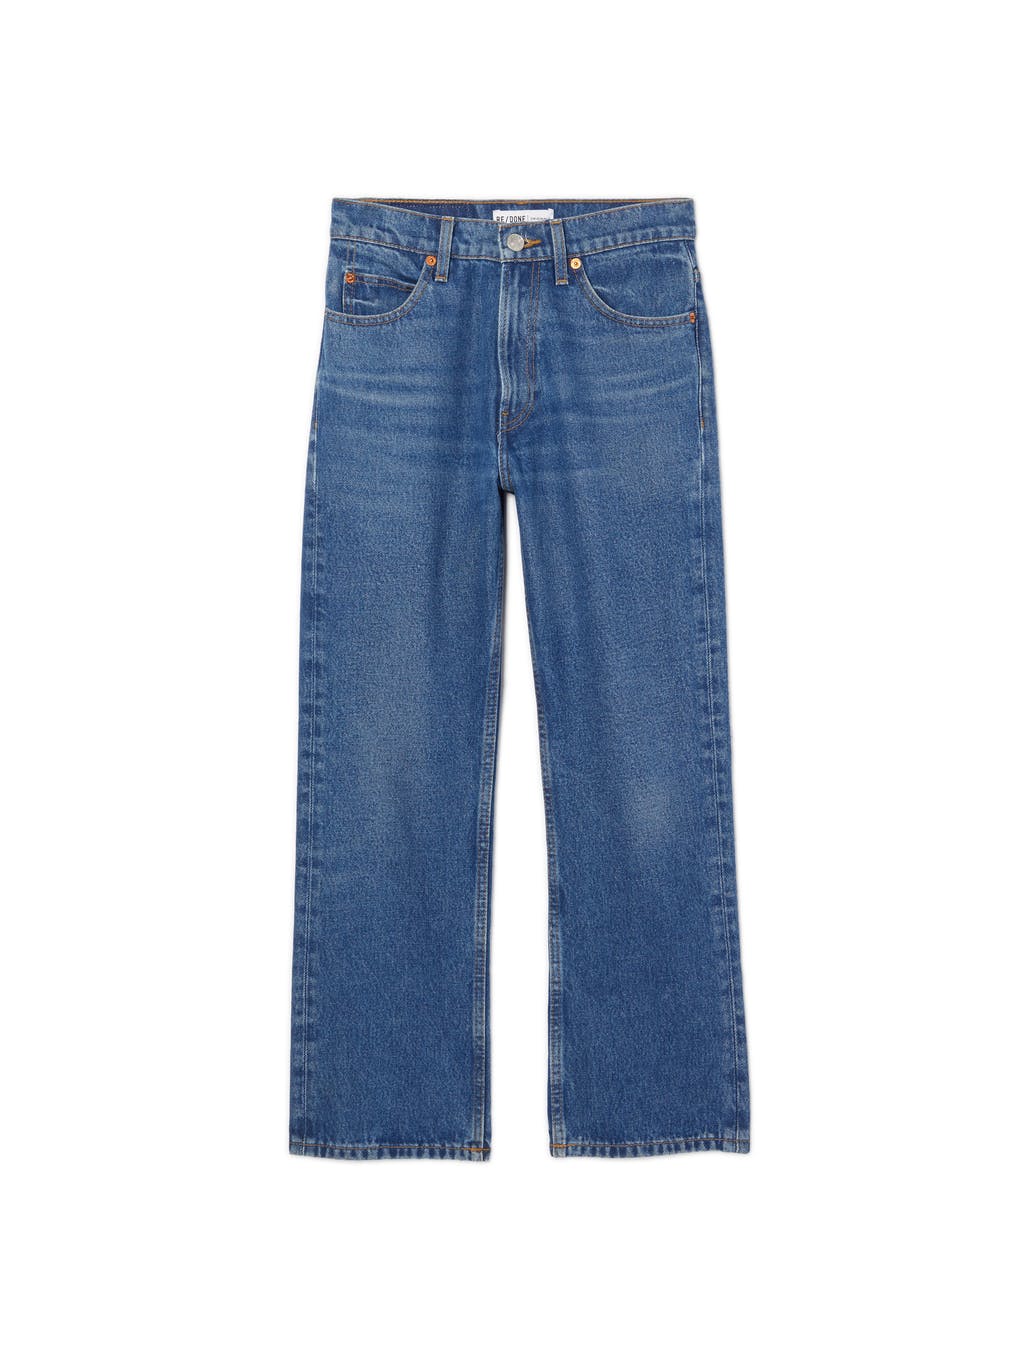 ‘70s Crop Bootcut Jeans